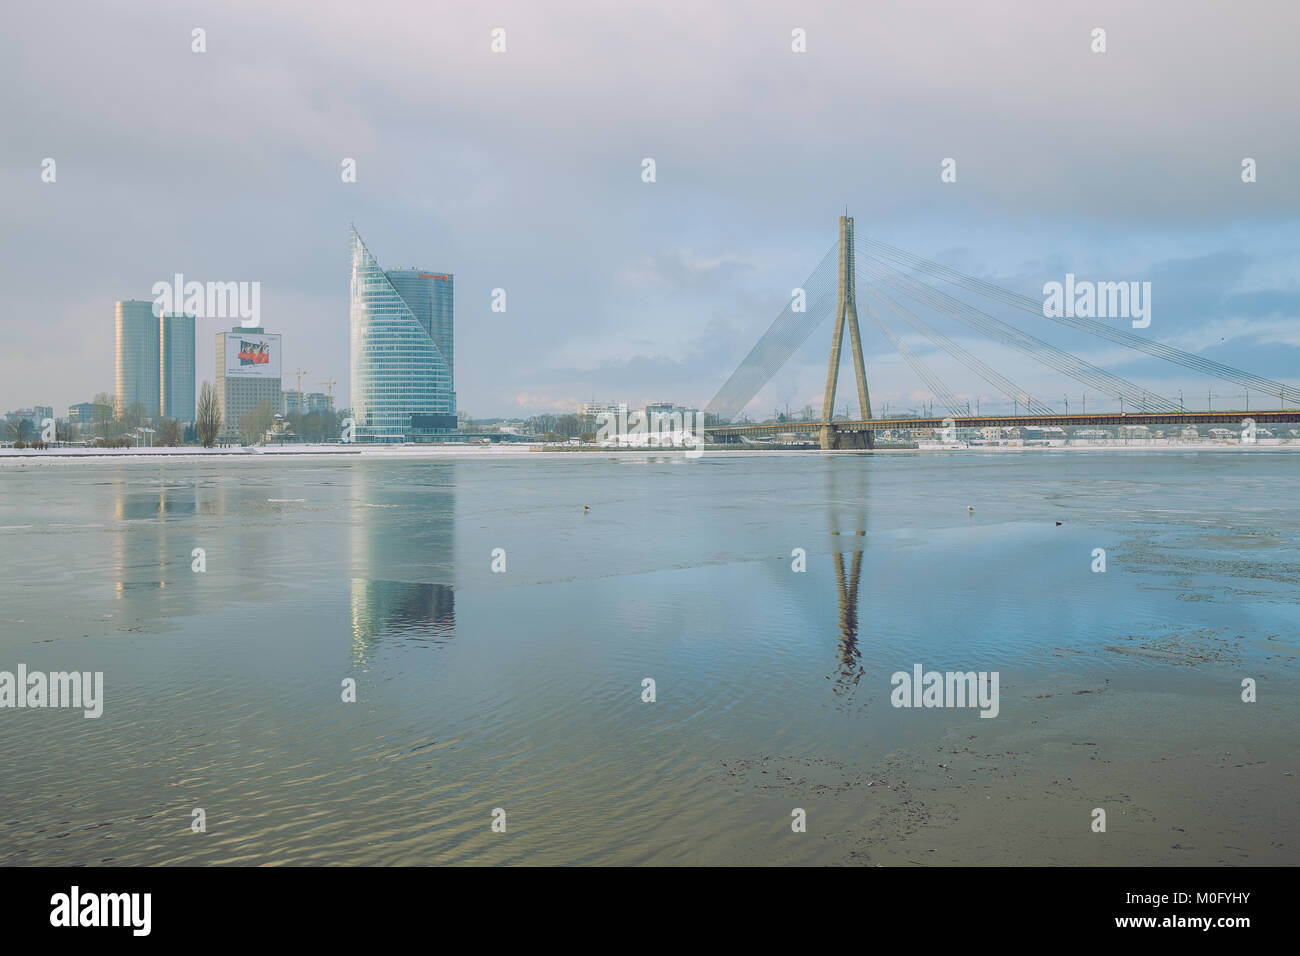 Latvia, Riga, old town center, bridge and architecture. 2018 Travel photo. Stock Photo